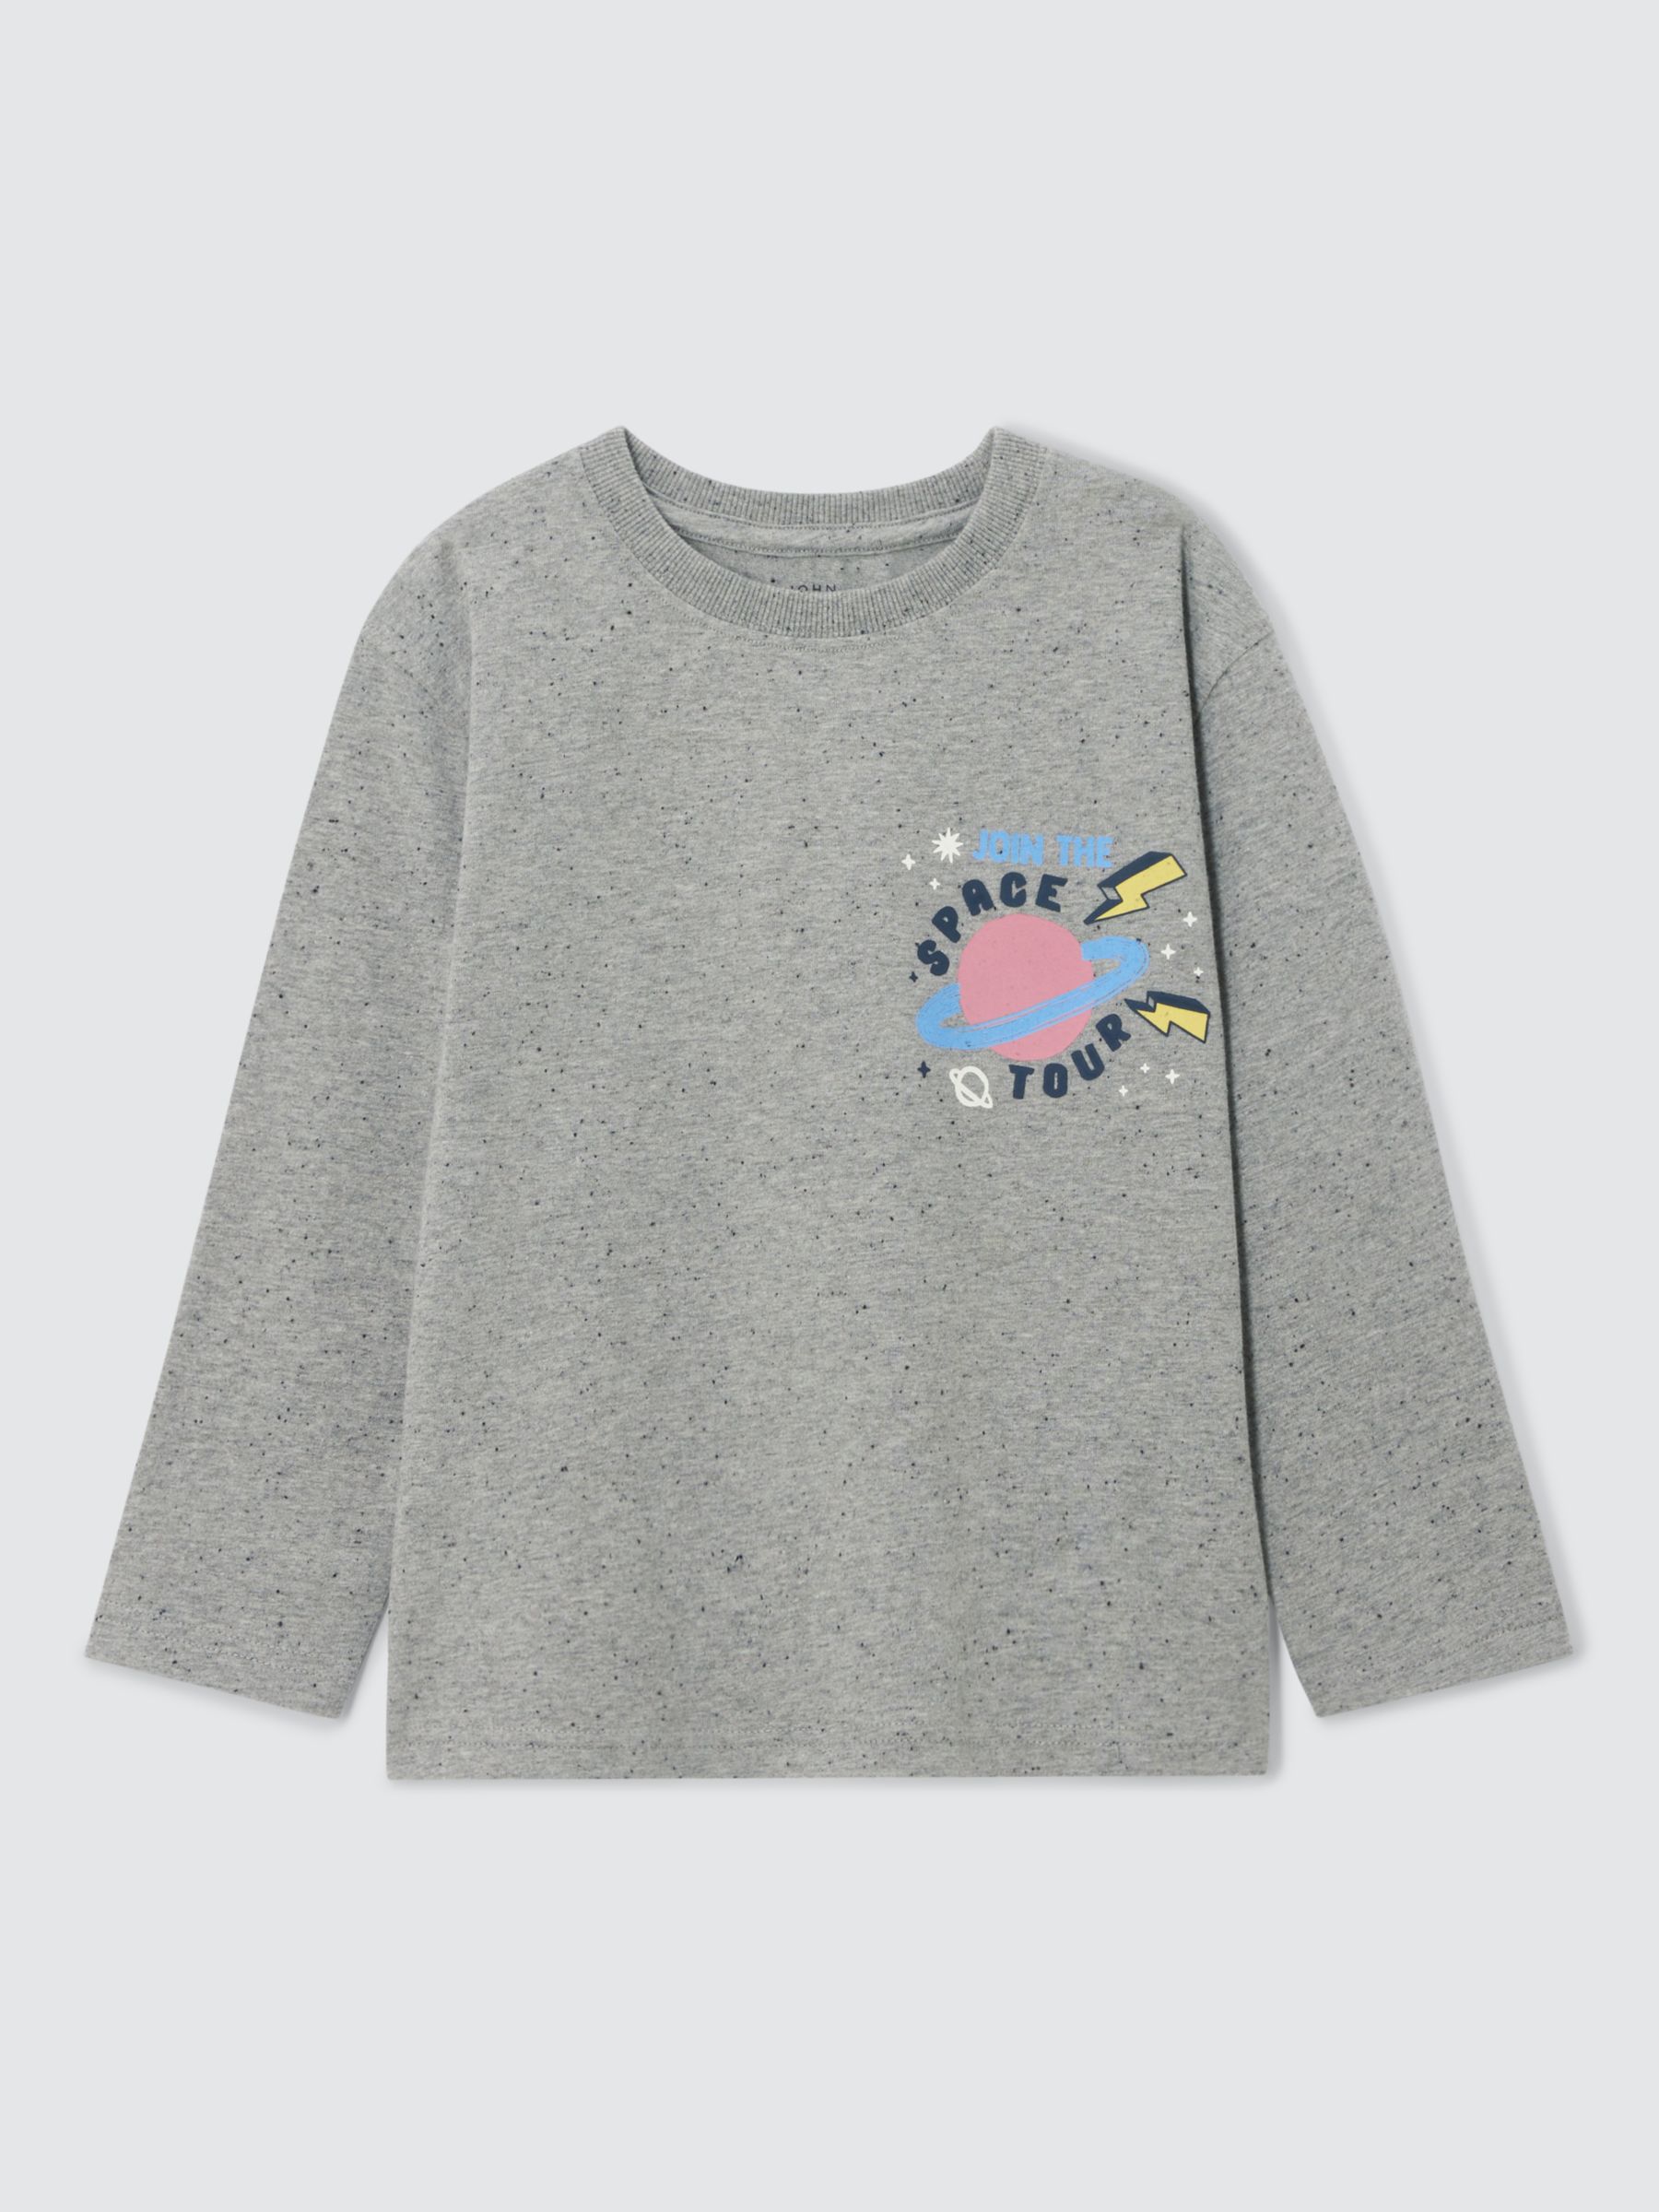 John Lewis Kids' Galaxy Crew Graphic Long Sleeve T-Shirt, Marl Grey, 8 years